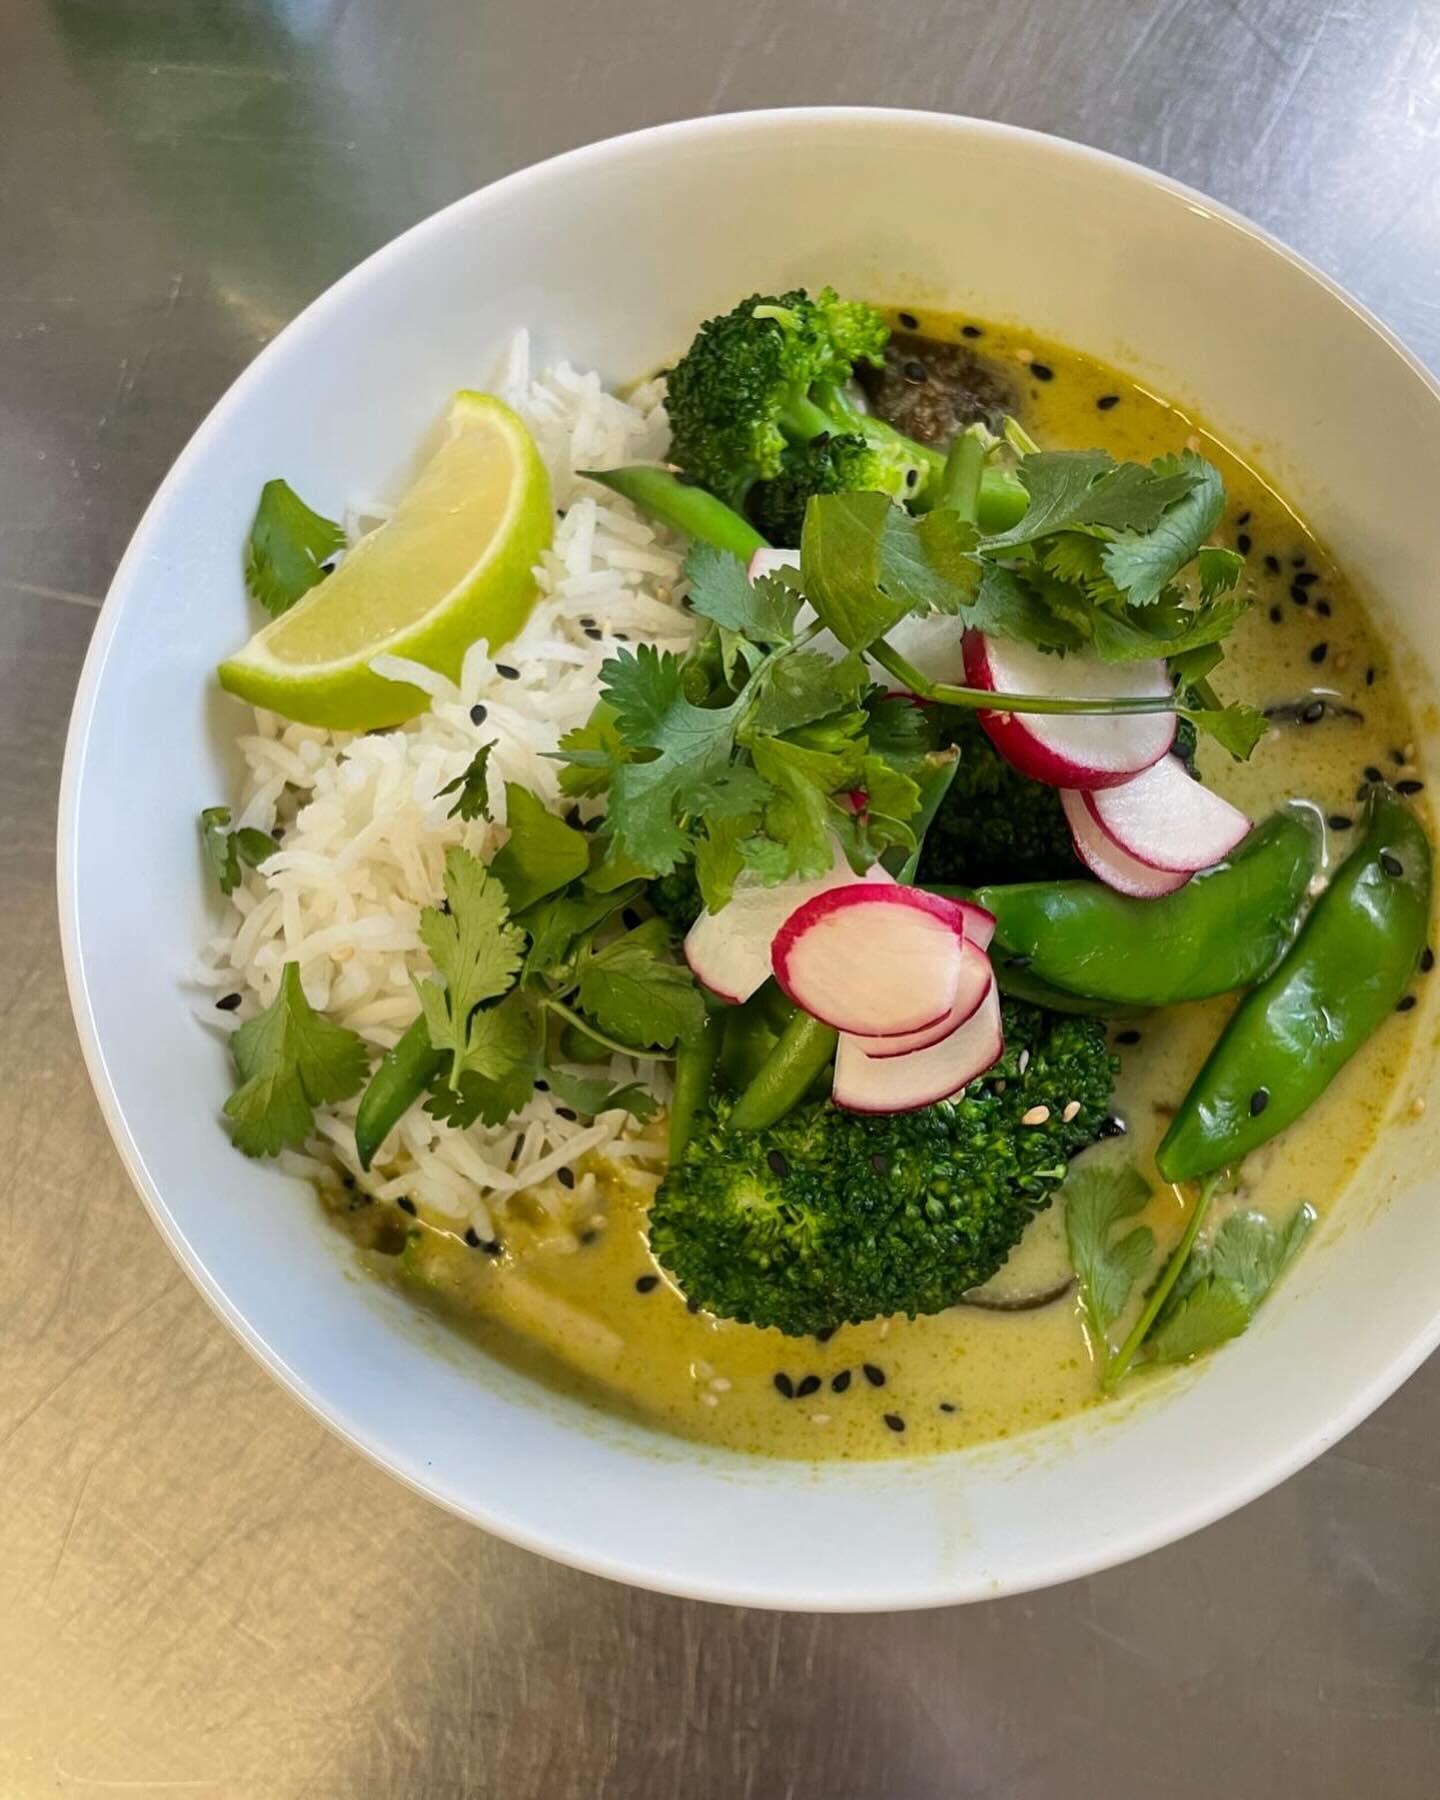 Thai green curry with rice 💚

#platformcafe #homecooking #veggielunch #vegan #plantbased #zerowaste #localcafe #homemade #cakes #coffee #kombucha #loughboroughjunction #brixton #camberwell #hernehill #foodiegram #southlondon